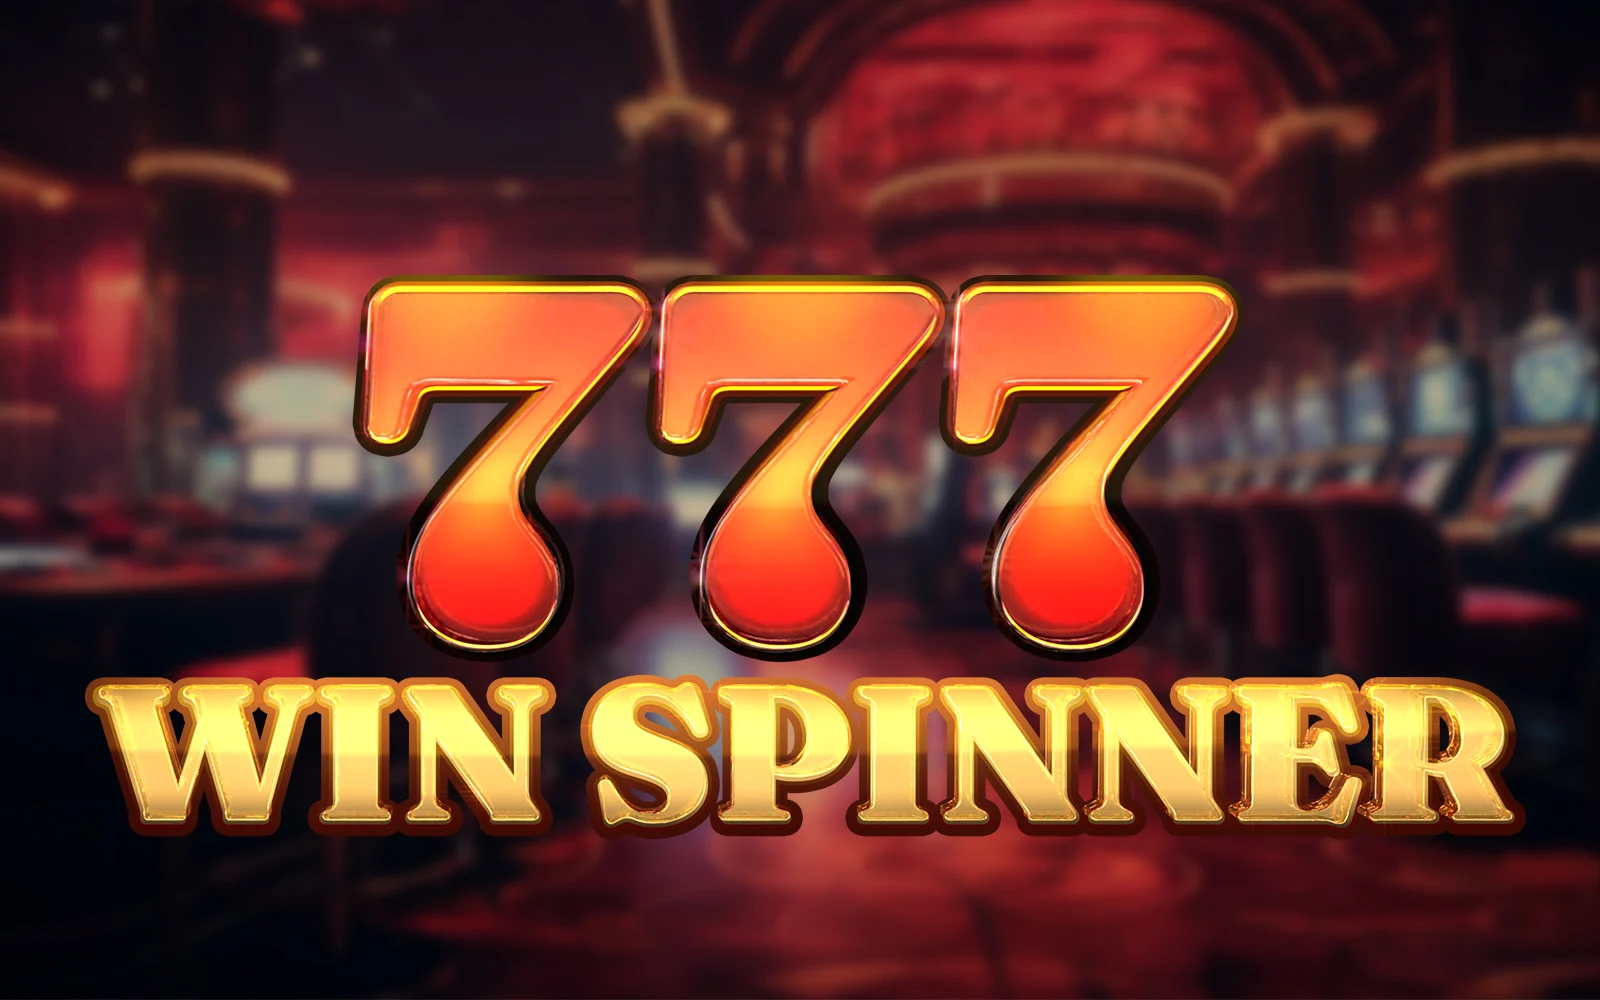 Jouer à 777 Win Spinner sur le casino en ligne Starcasino.be